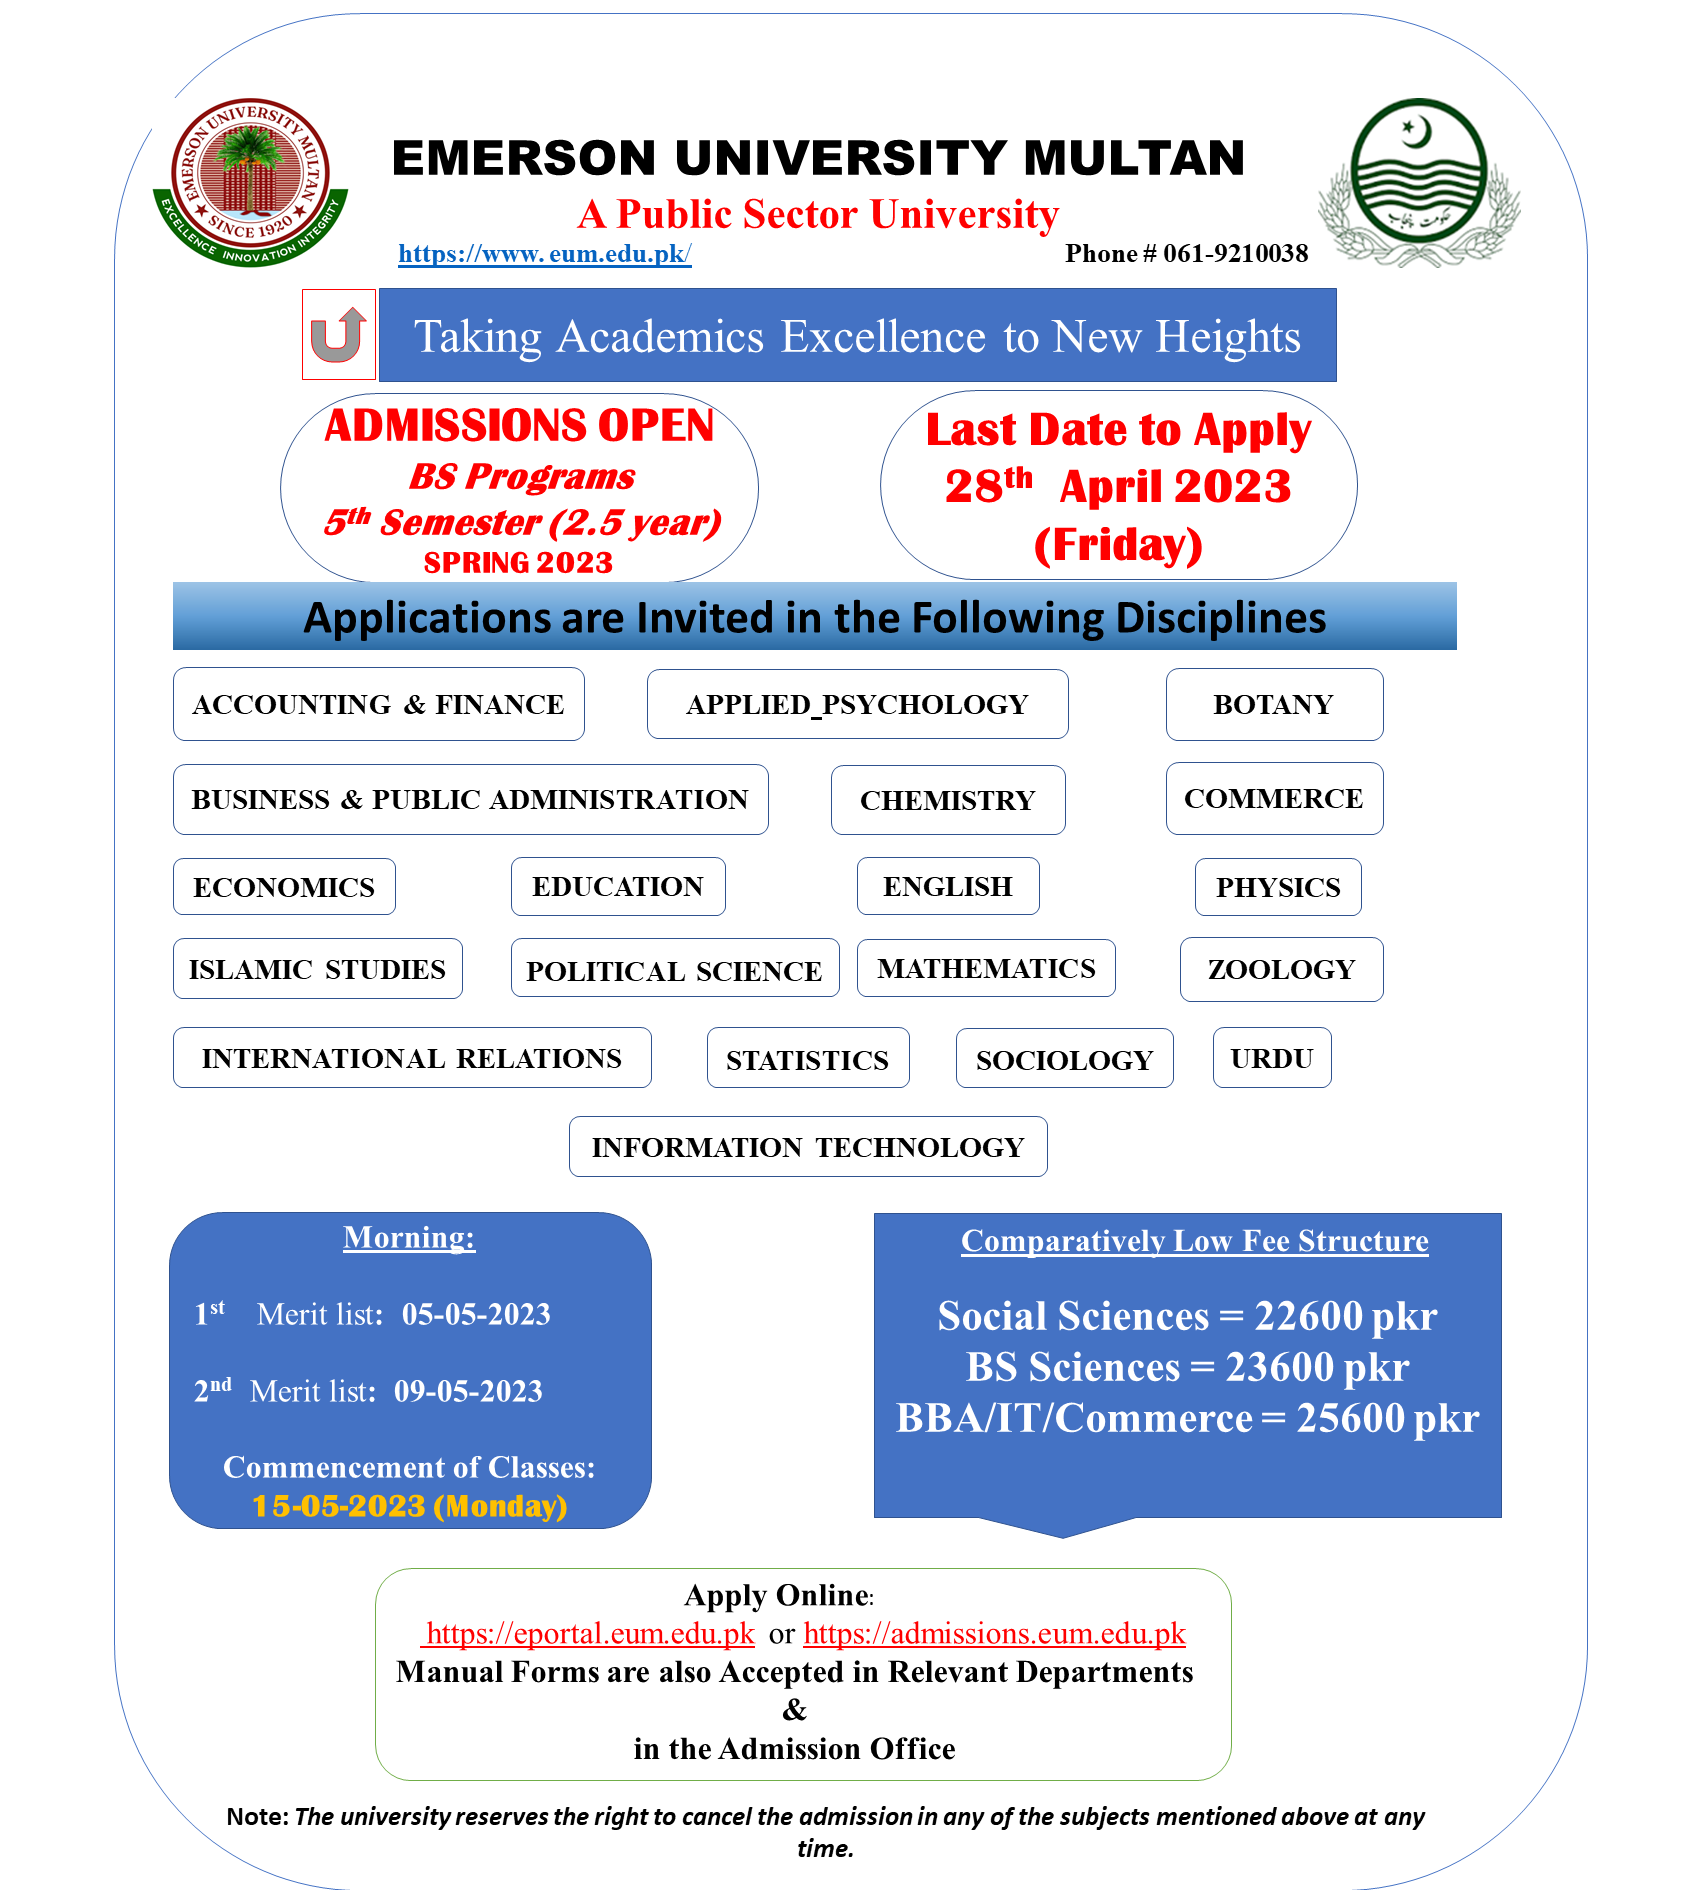 Emerson University Multan Admission